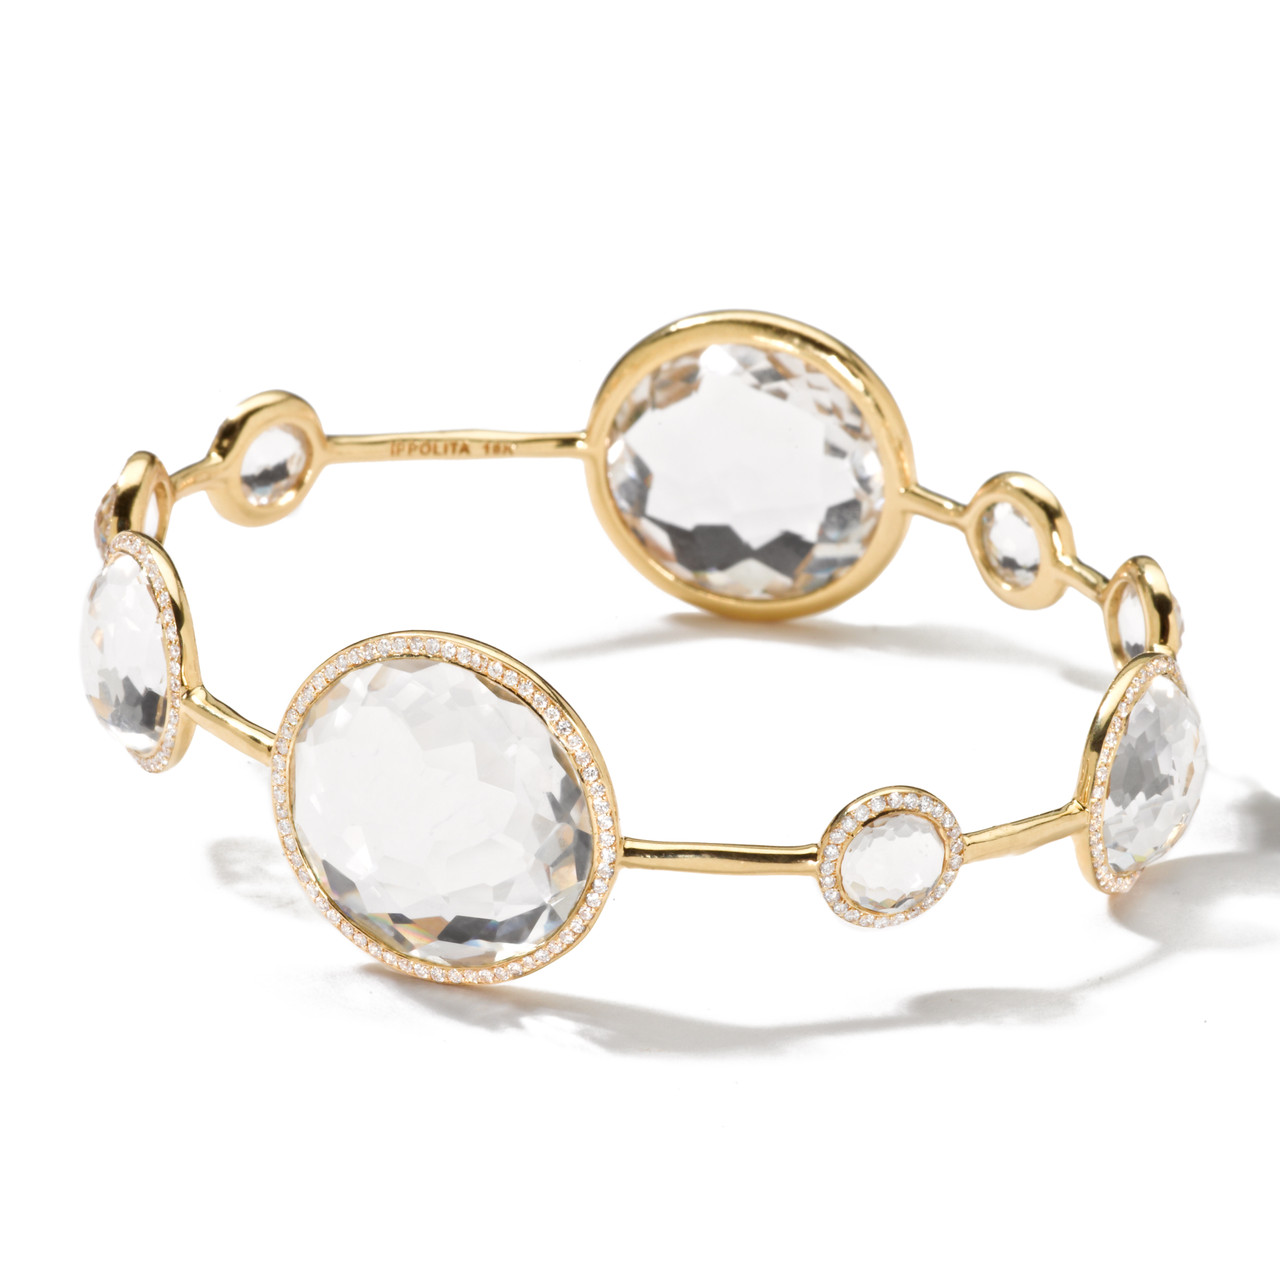 Rose Gold Platted Crystal Jewellery Combo of 5 Designer Adjustable Chain Bangle  Bracelet Emblished with White